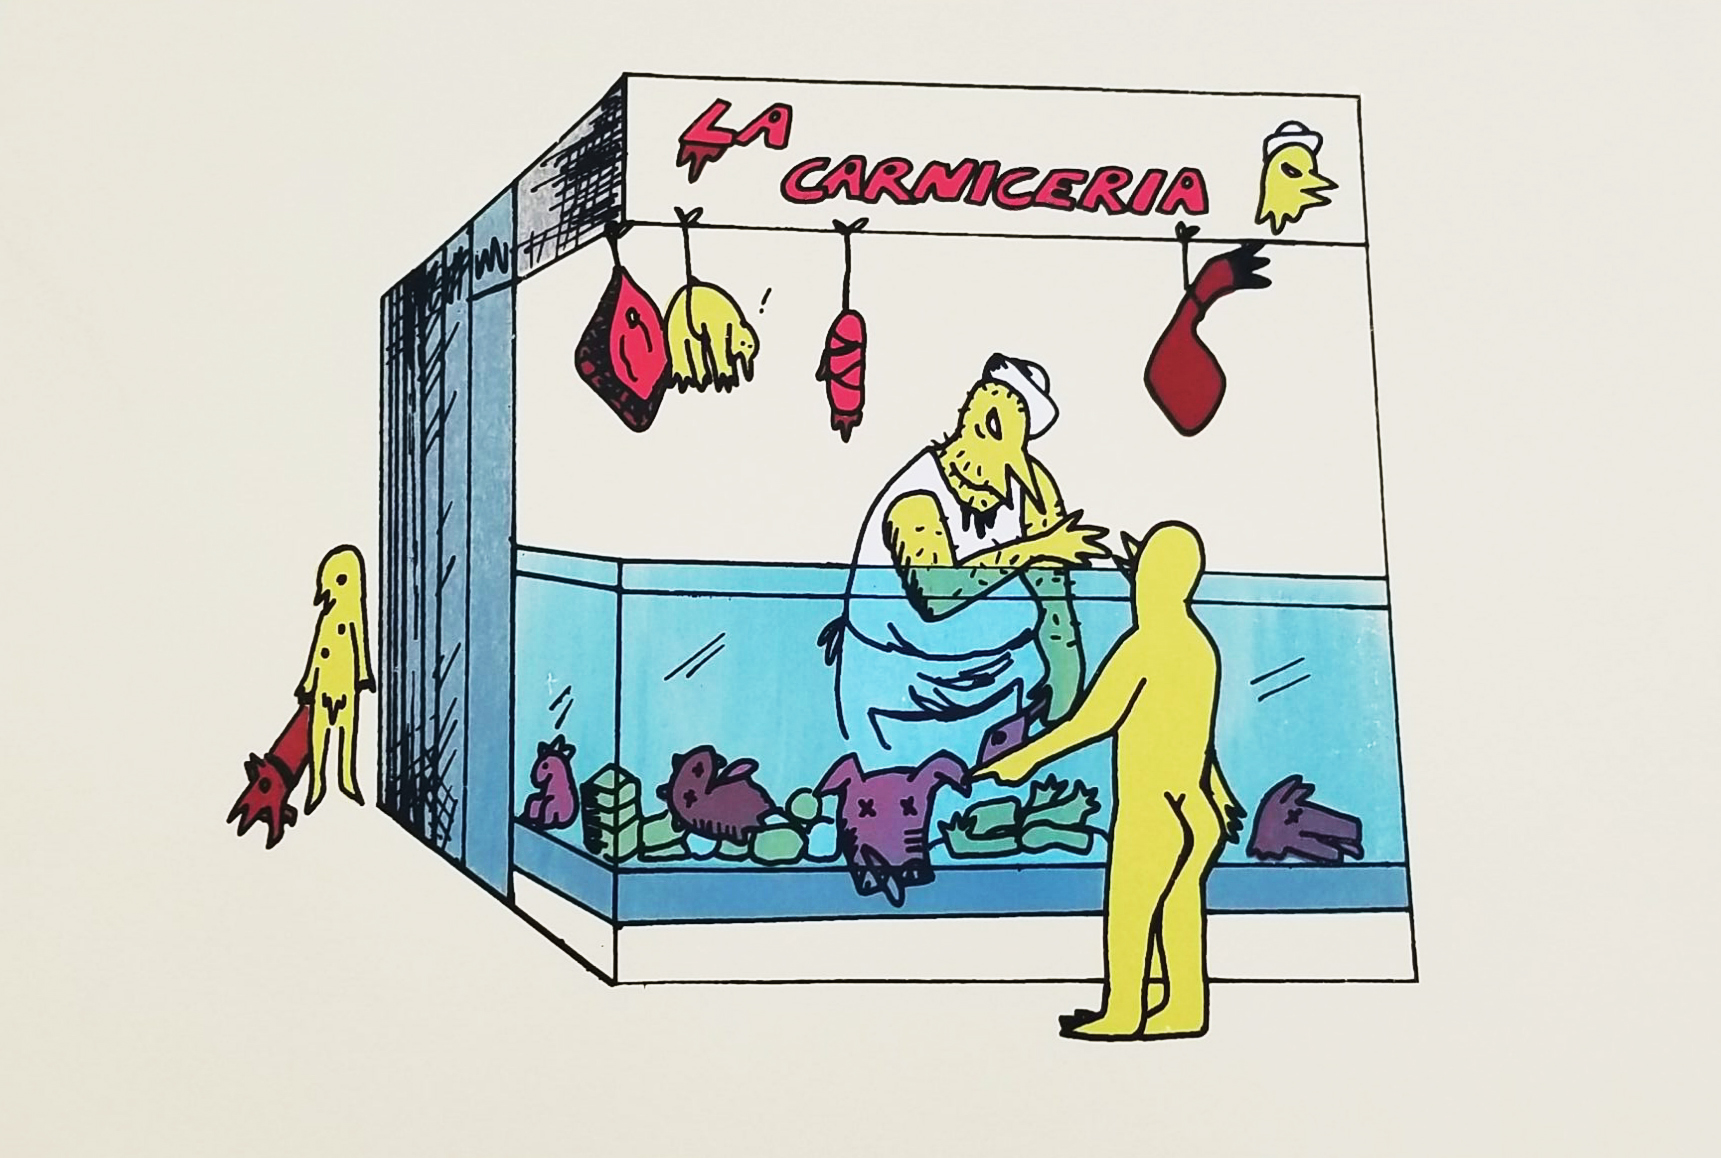 La Carniceria, seven color screenprint by Paulina Eguino.